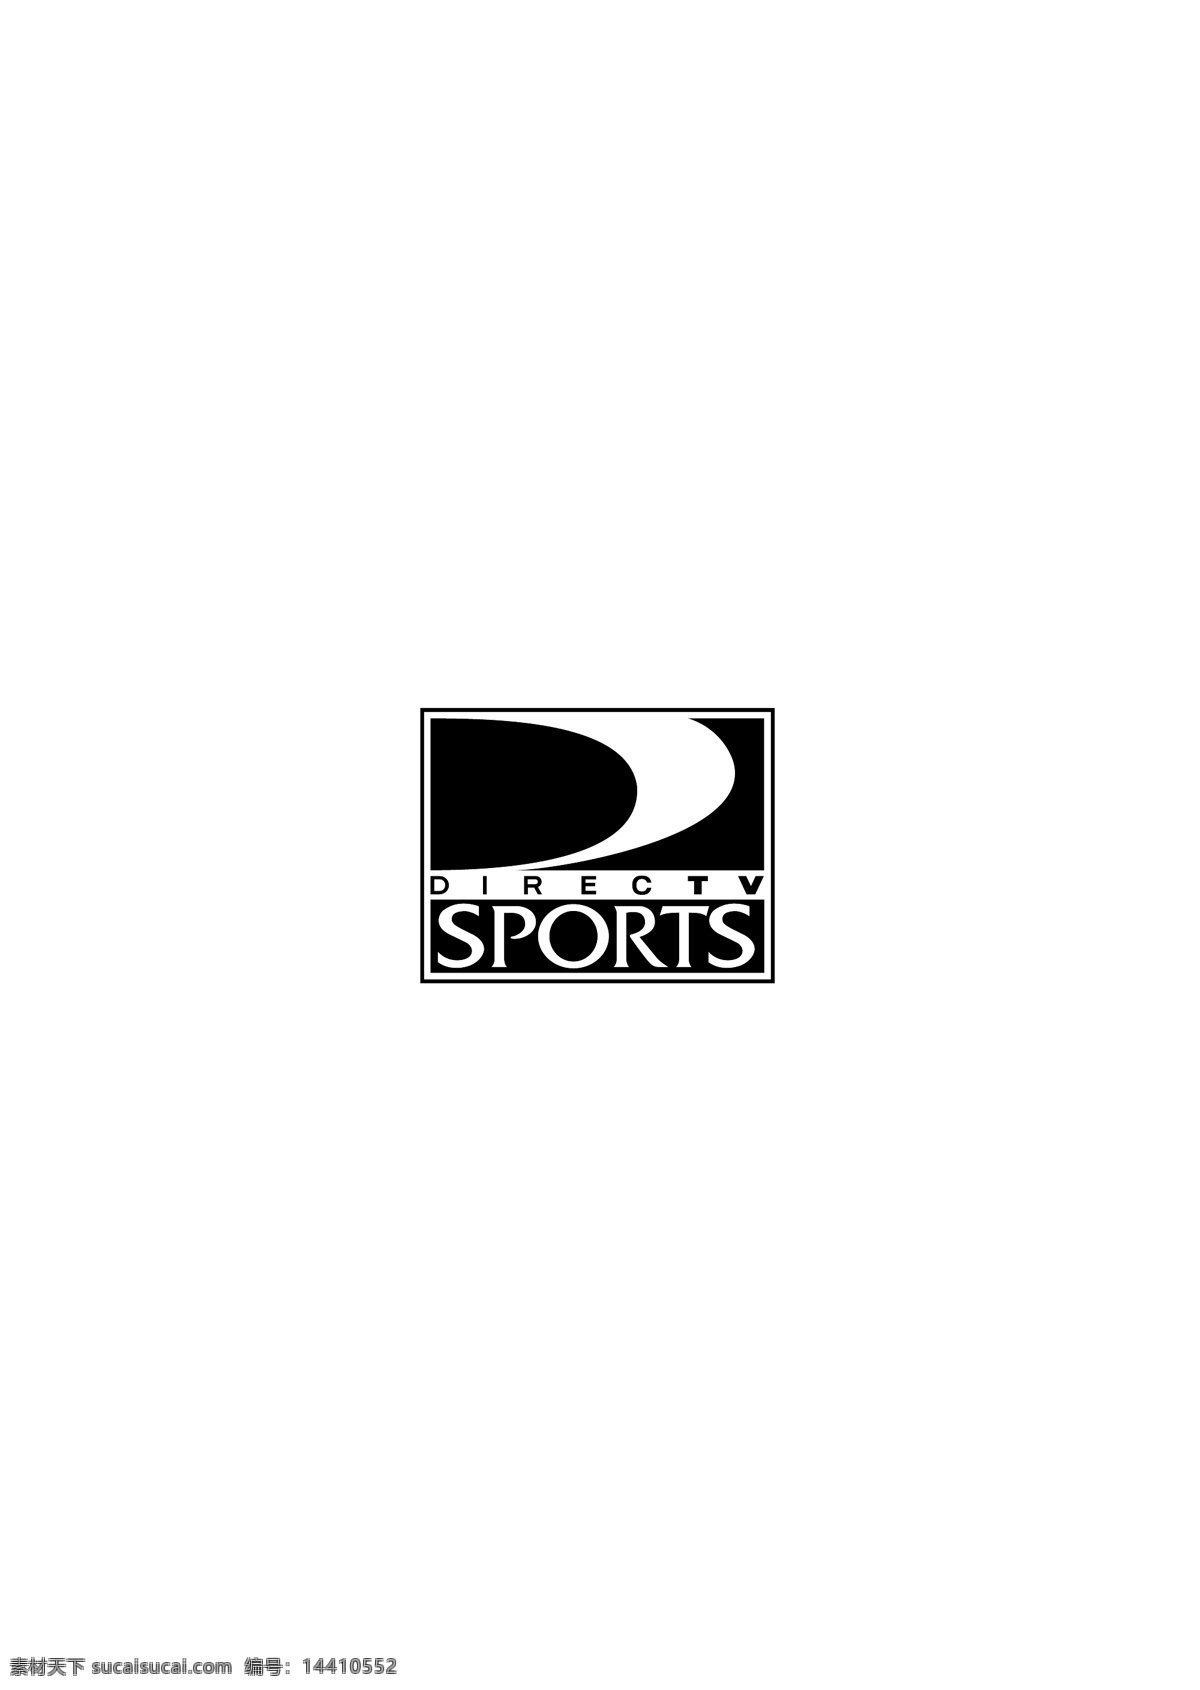 logo大全 logo 设计欣赏 商业矢量 矢量下载 directvsports 运动 赛事 标志设计 欣赏 网页矢量 矢量图 其他矢量图